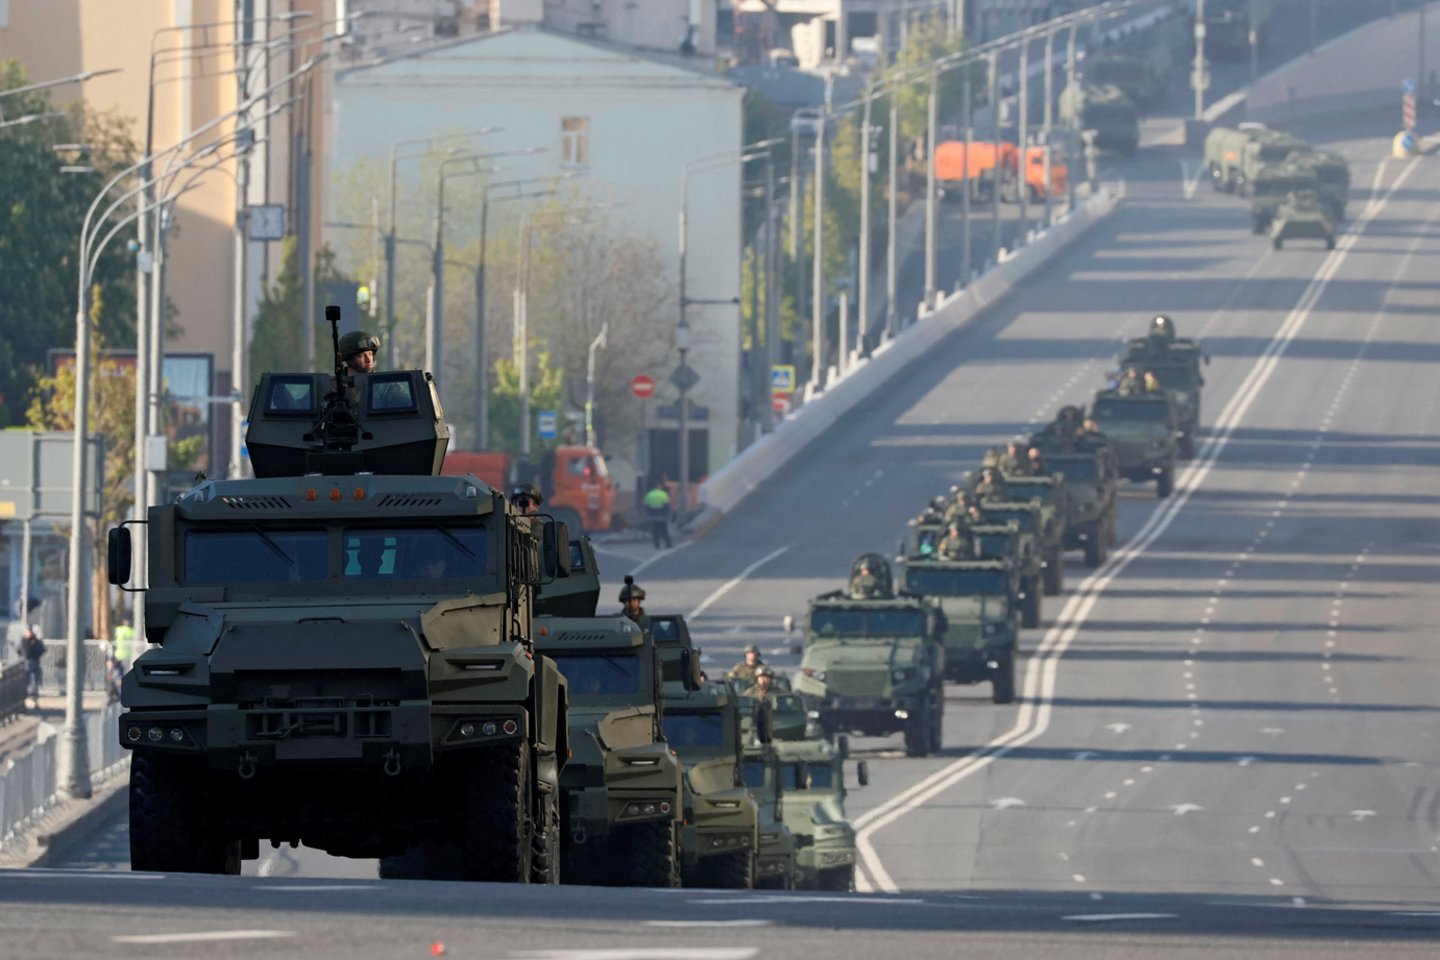 Pergalės dienos paradas Maskvoje.<br>Reuters/Scanpix nuotr.